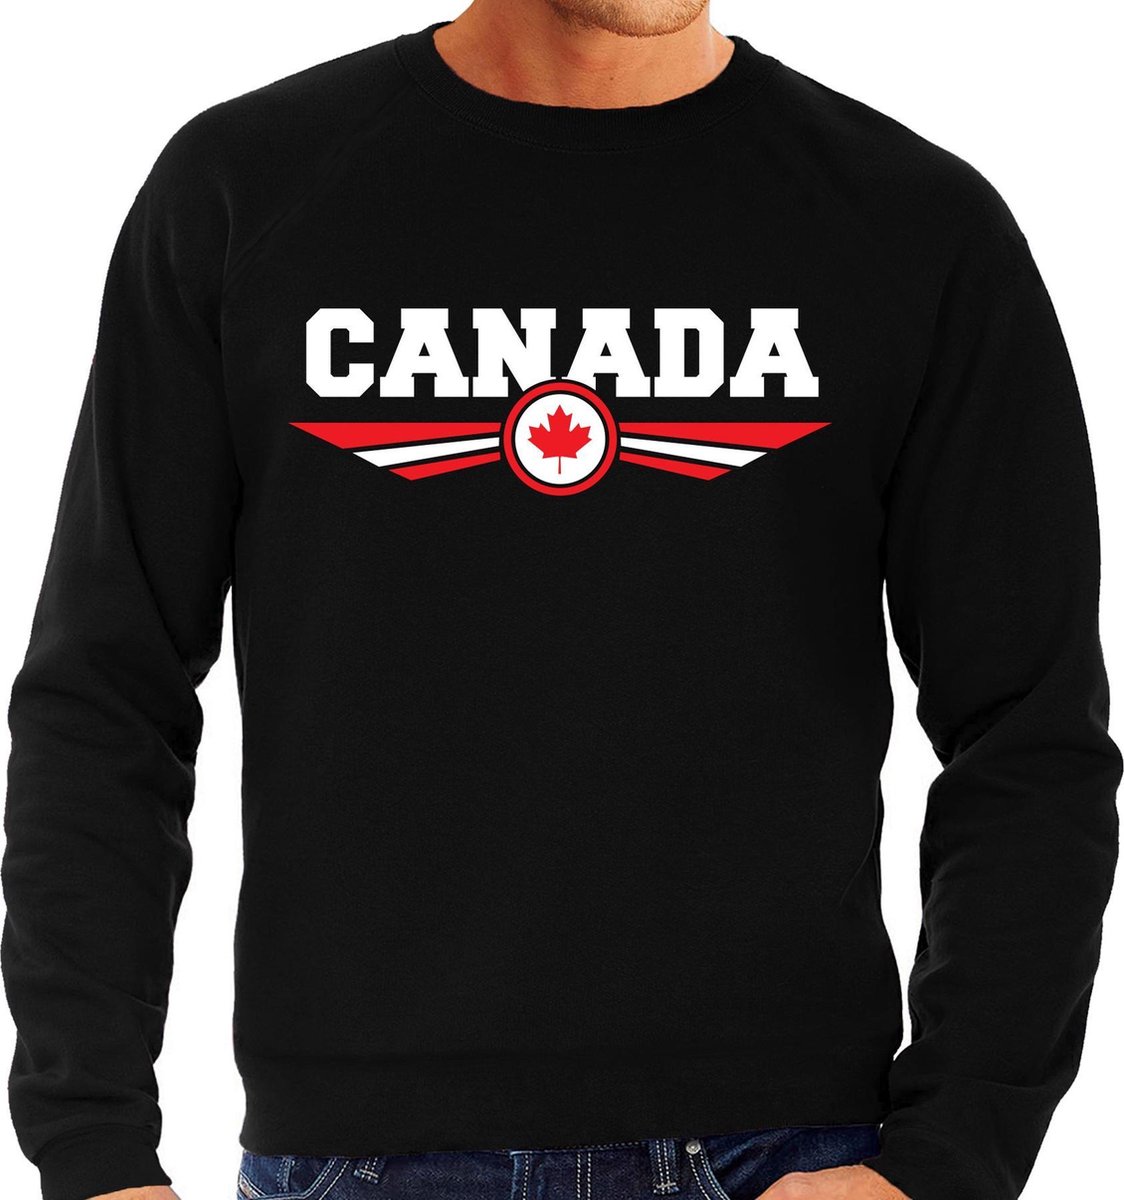 Canada landen sweater / trui zwart heren XL